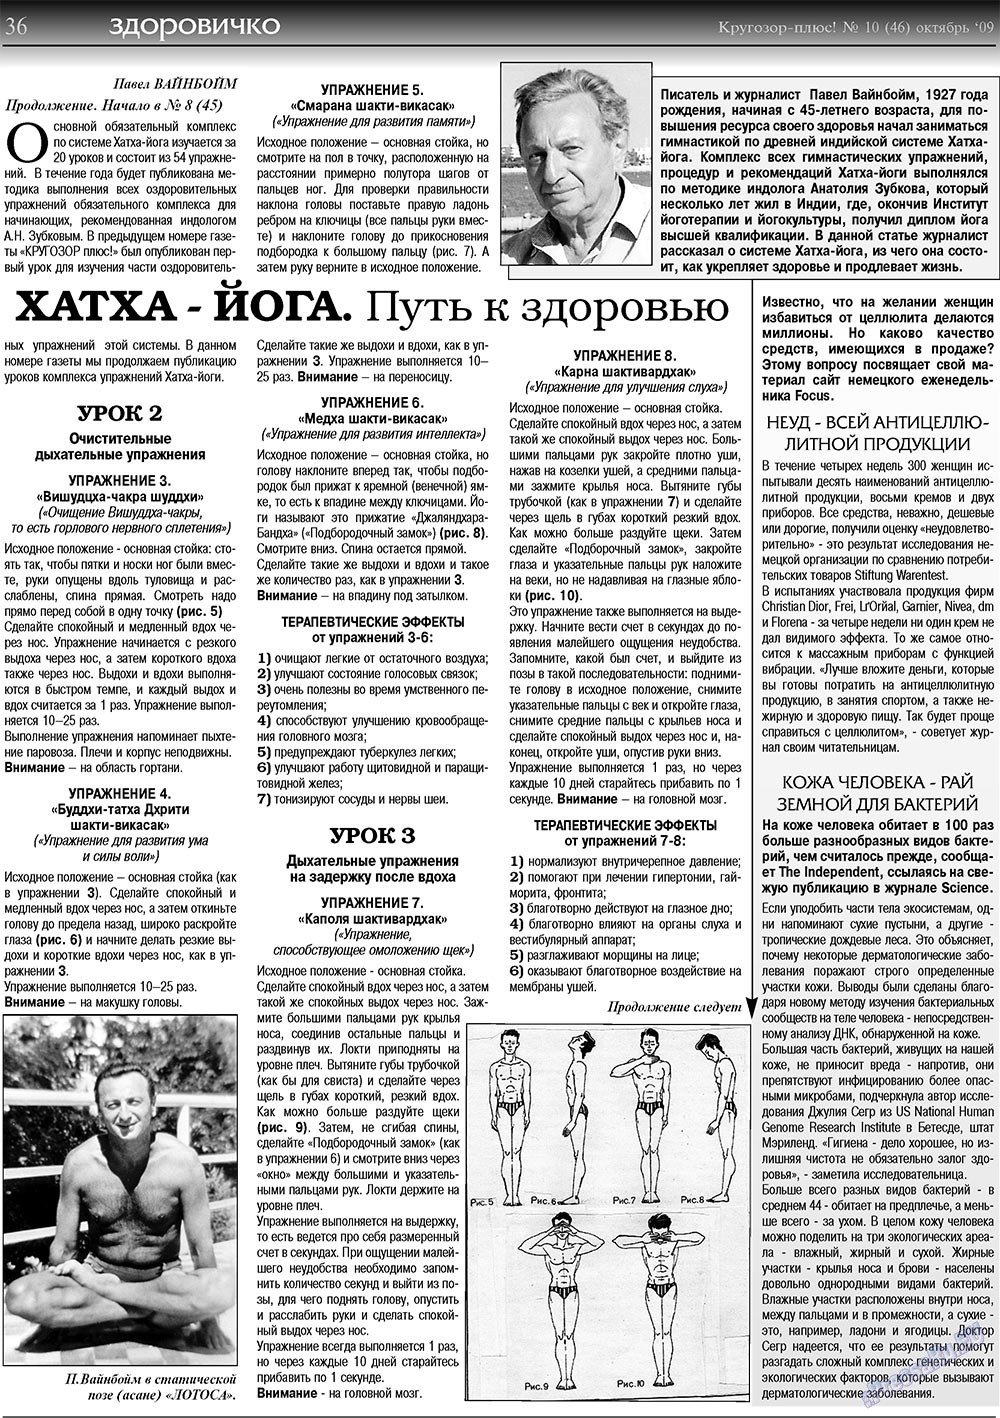 Кругозор плюс! (газета). 2009 год, номер 10, стр. 36